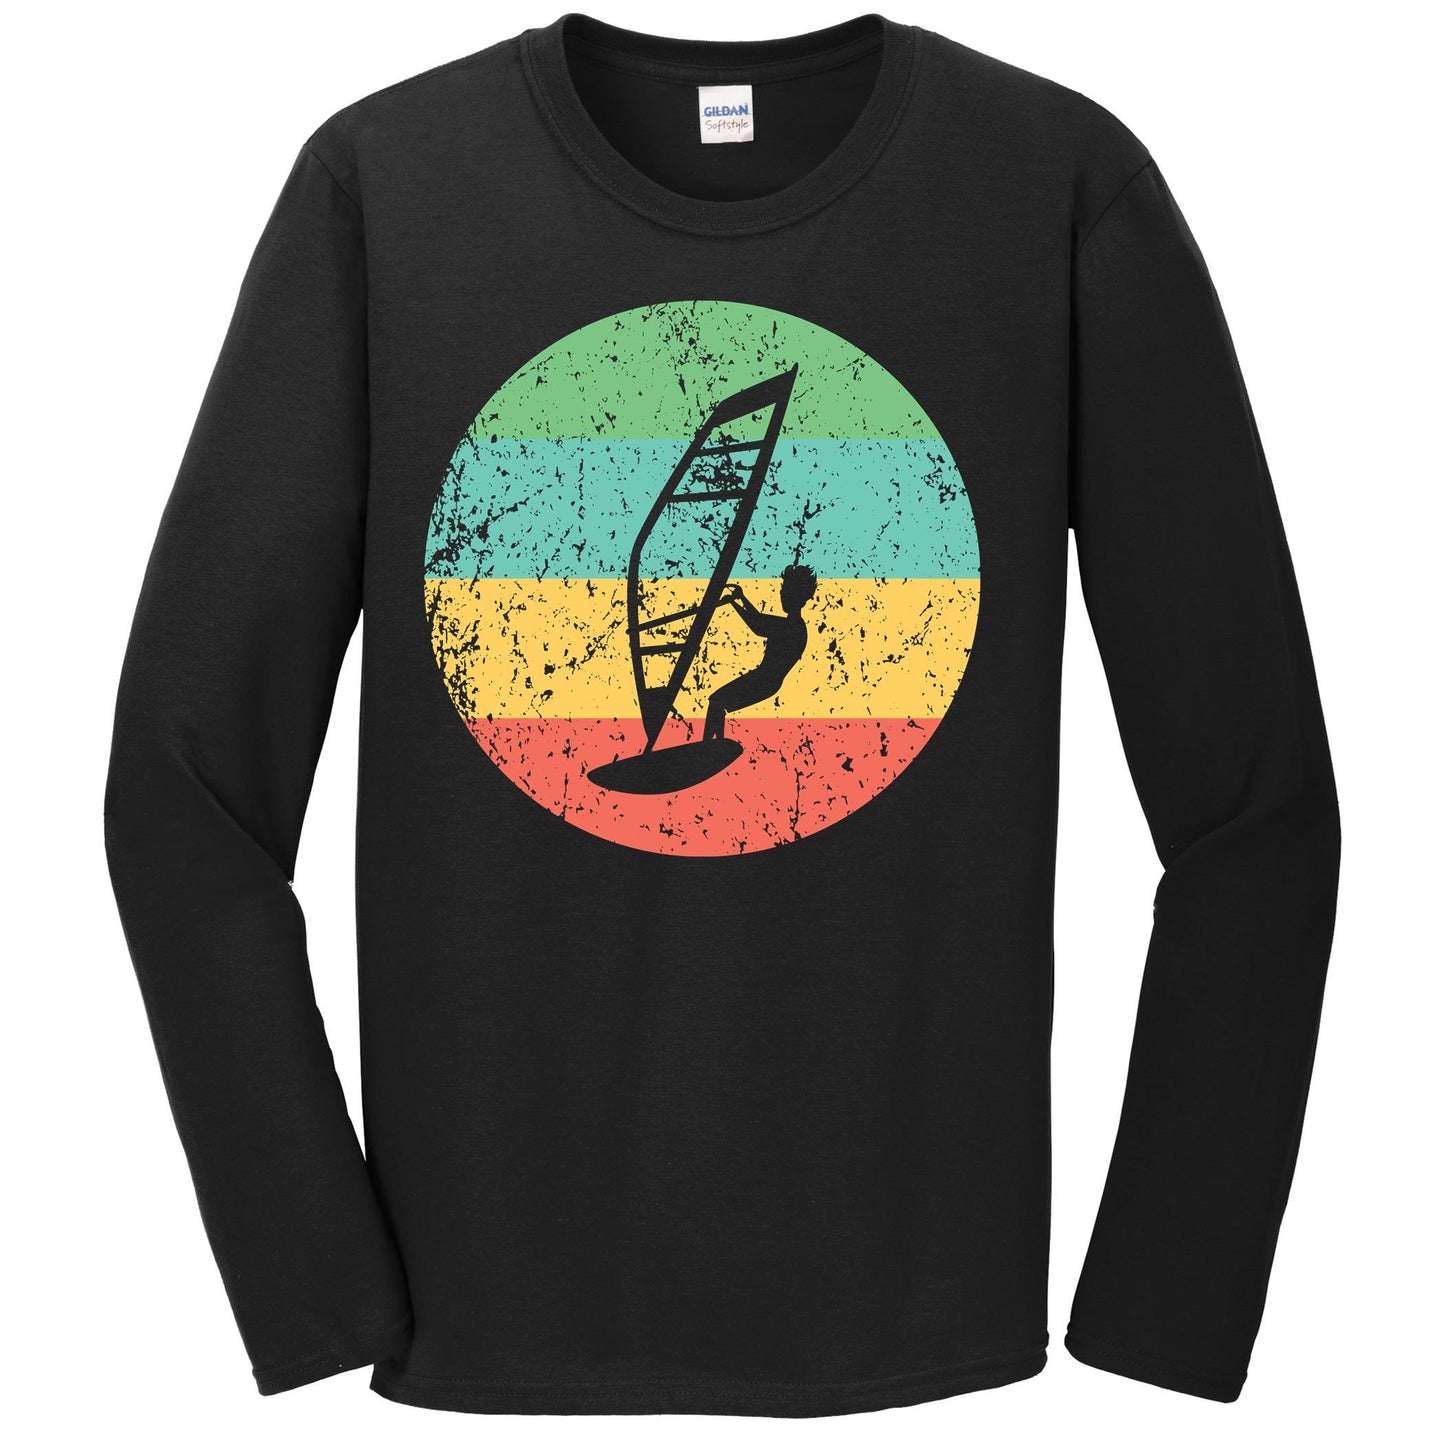 Windsurfing Long Sleeve Shirt - Vintage Retro Windsurfer T-Shirt